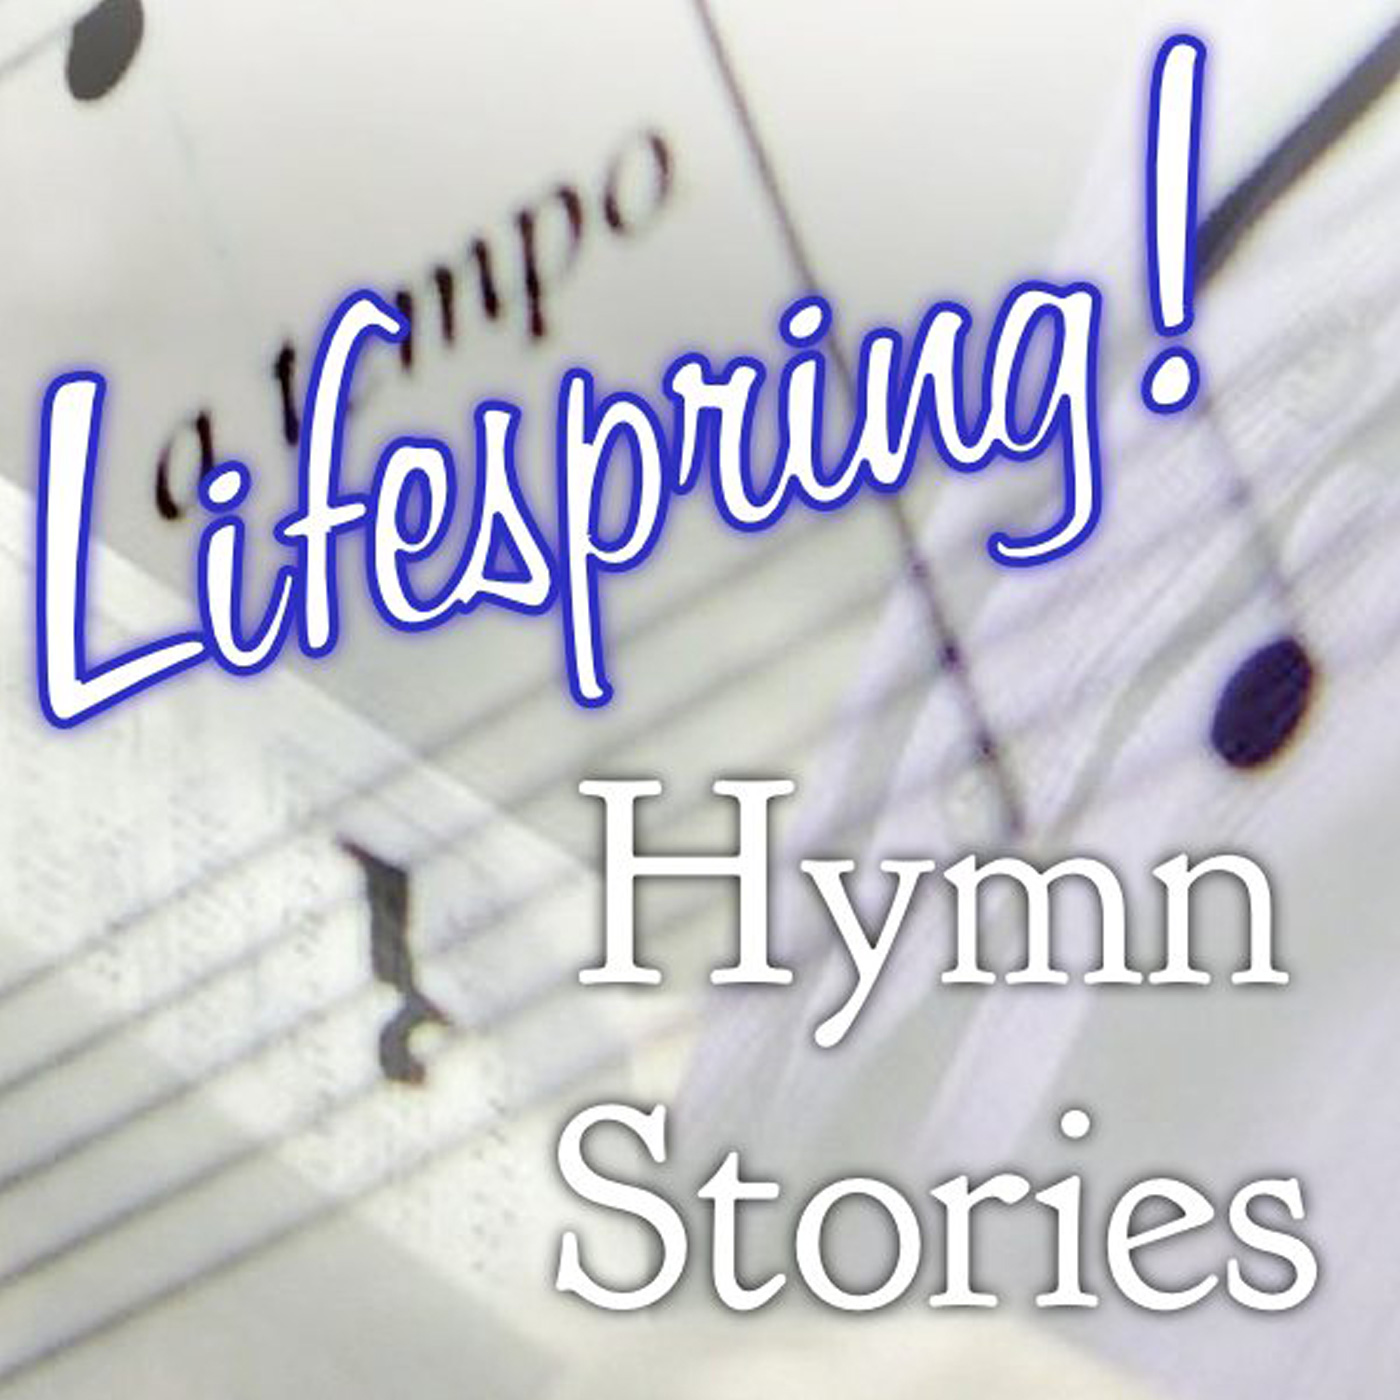 Lifespring! HymnStories